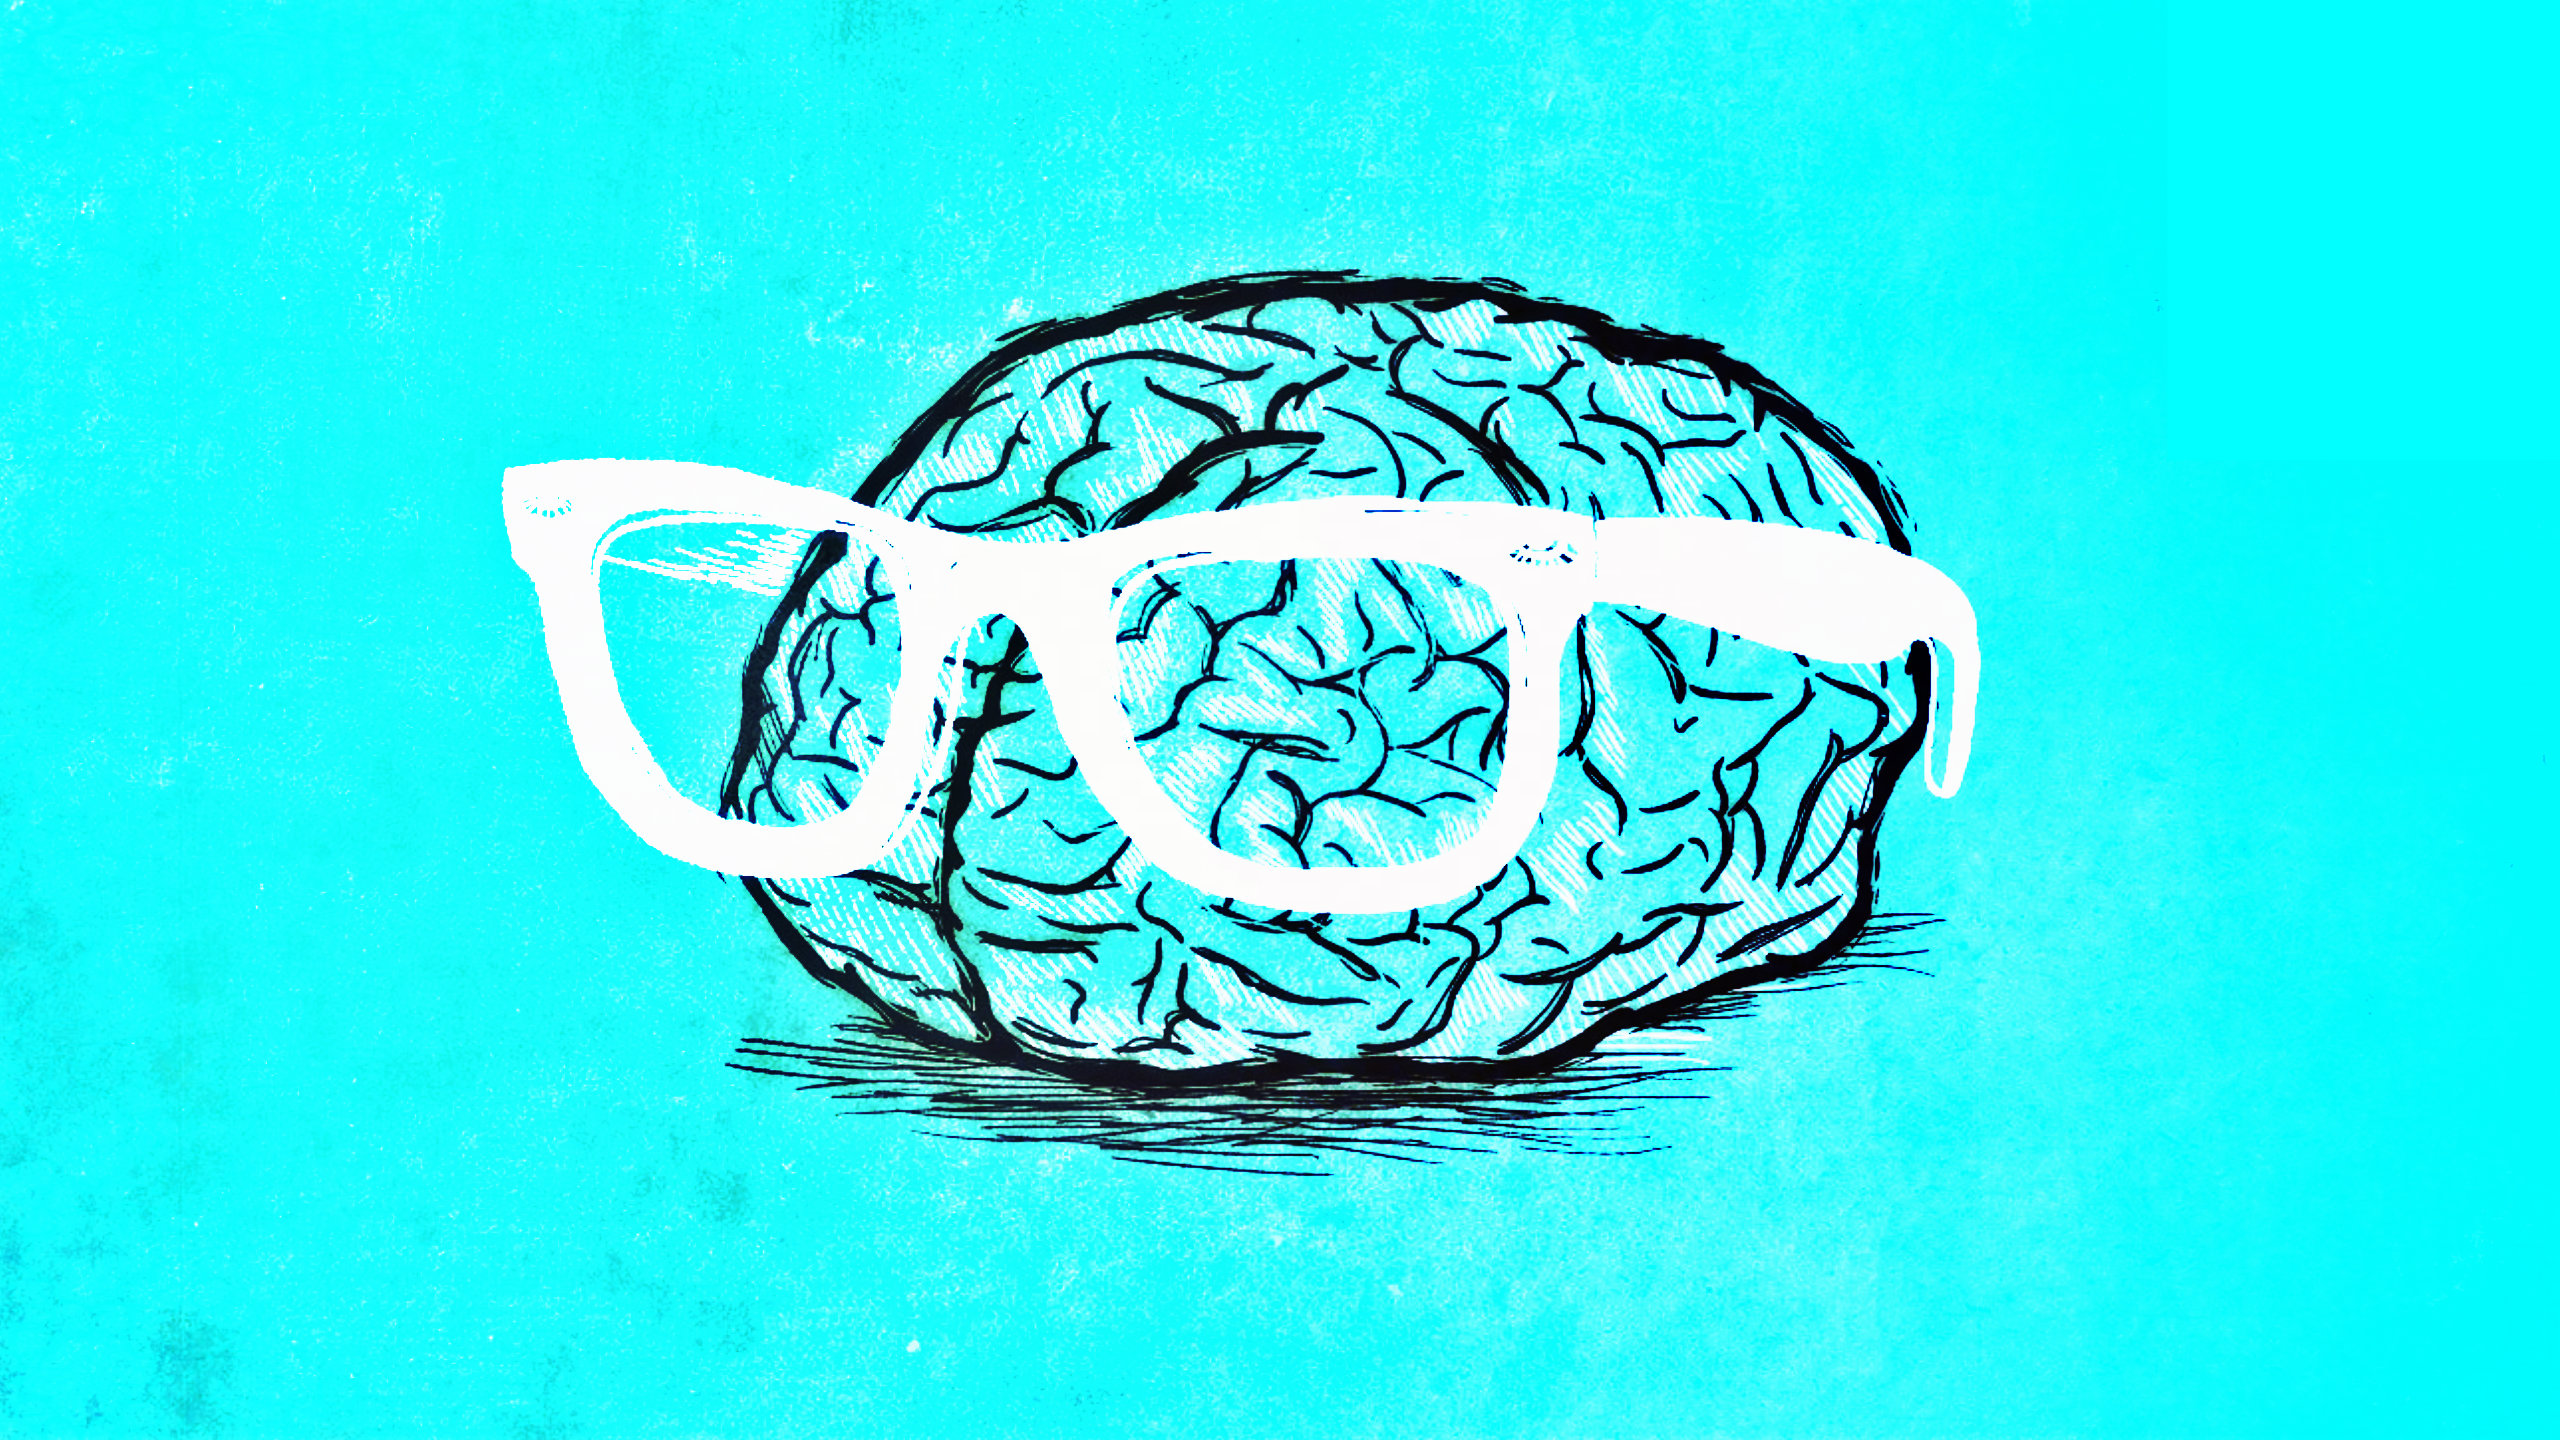 android brain, humor, nerd, blue, weird